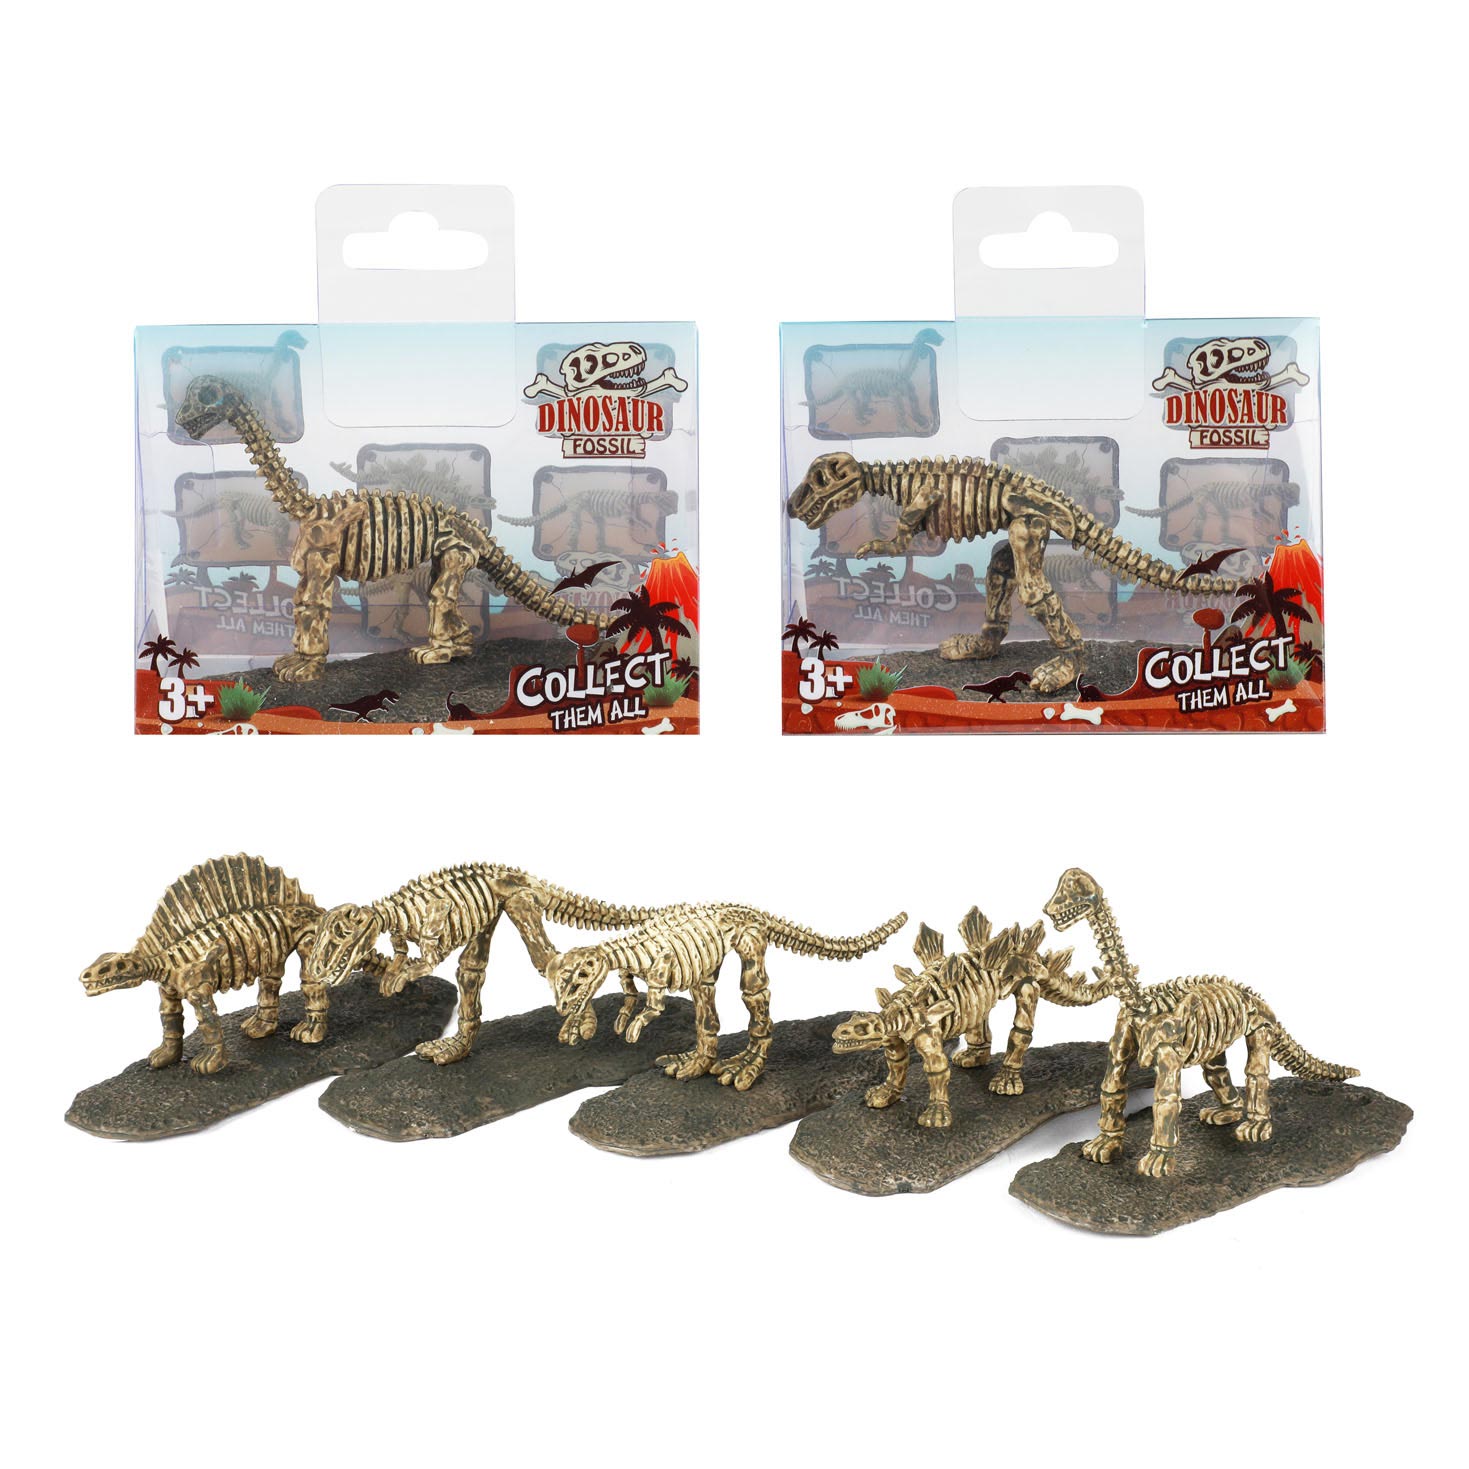 Dinosaurier-Fossil-Sammelfigur